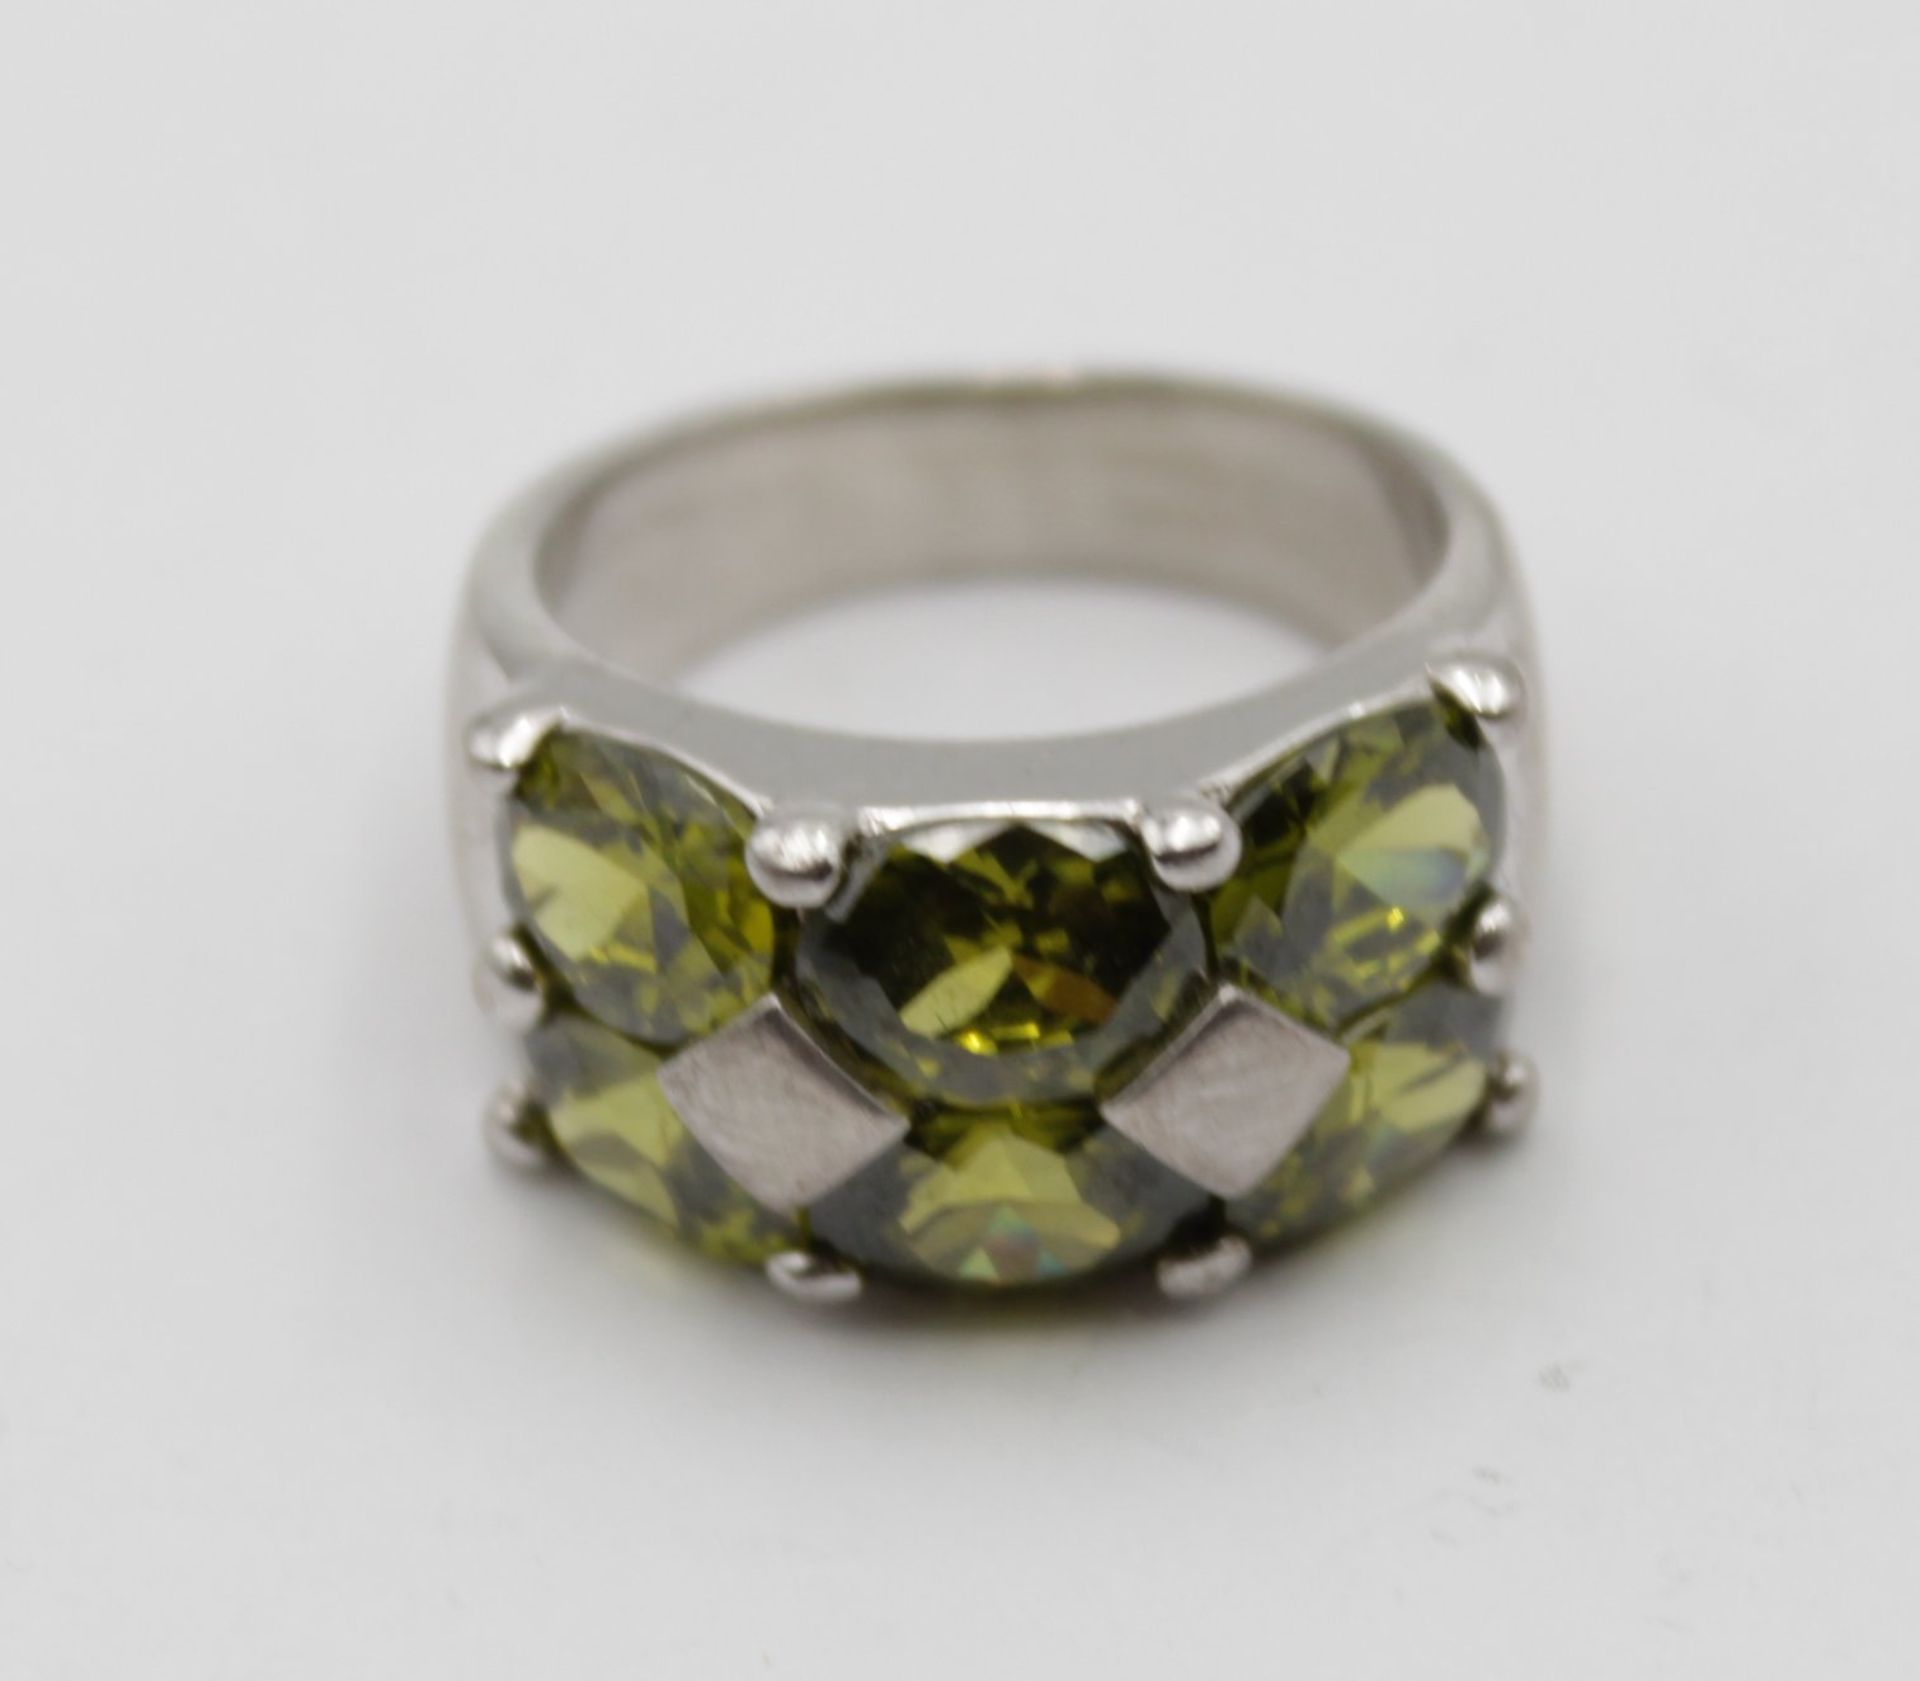 925er Silber-Ring, grünes facc. Farbsteine, 11,1gr., RG 57